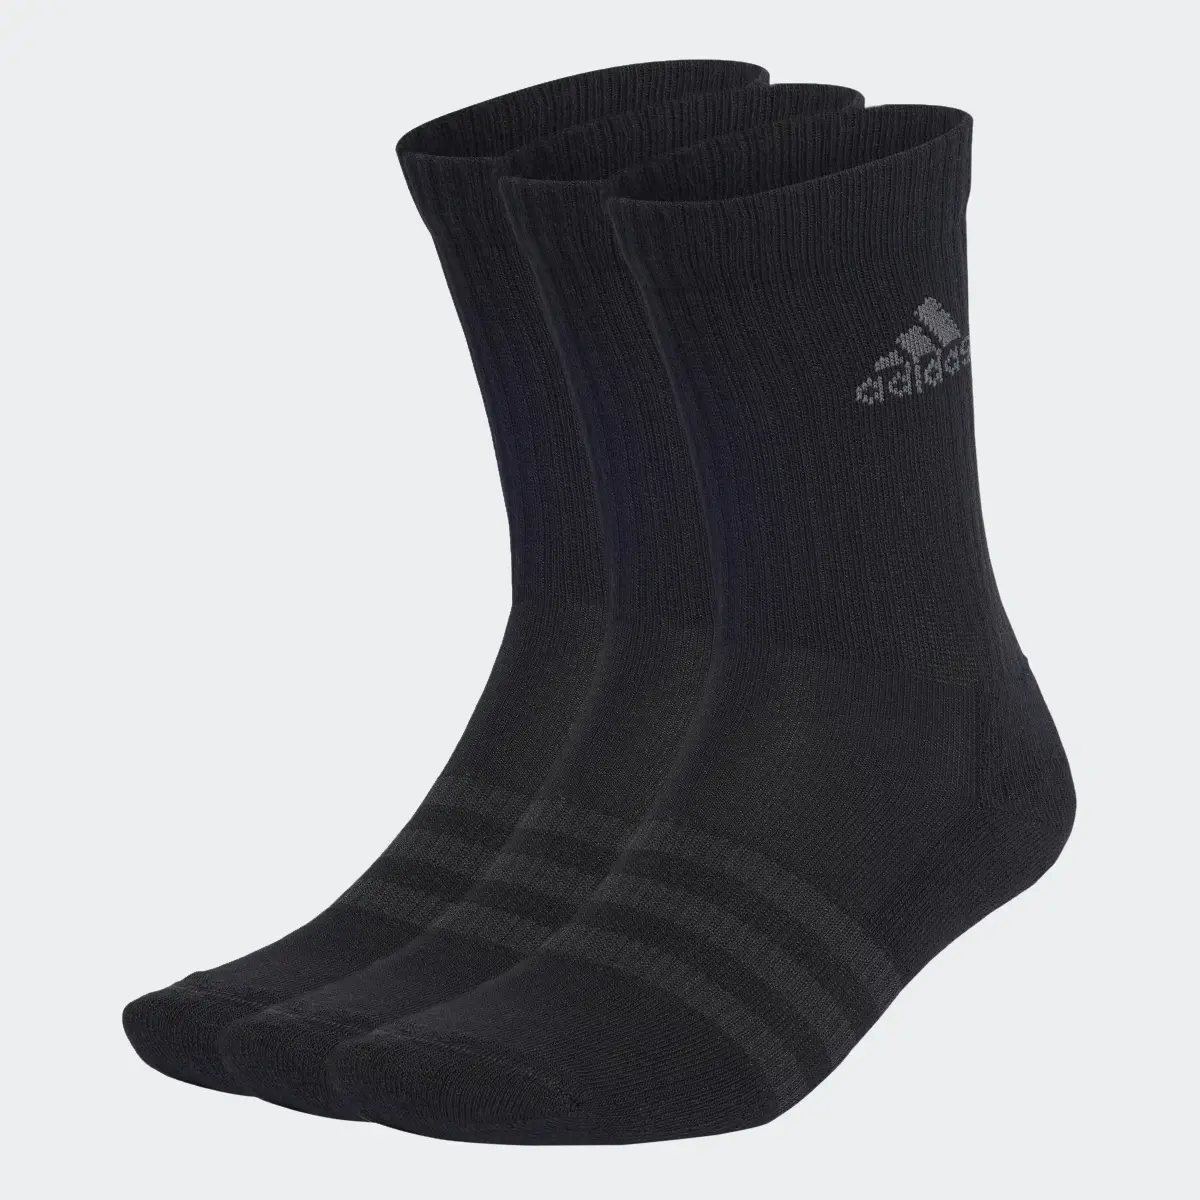 Adidas Cushioned Crew Socks 3 Pairs. 2